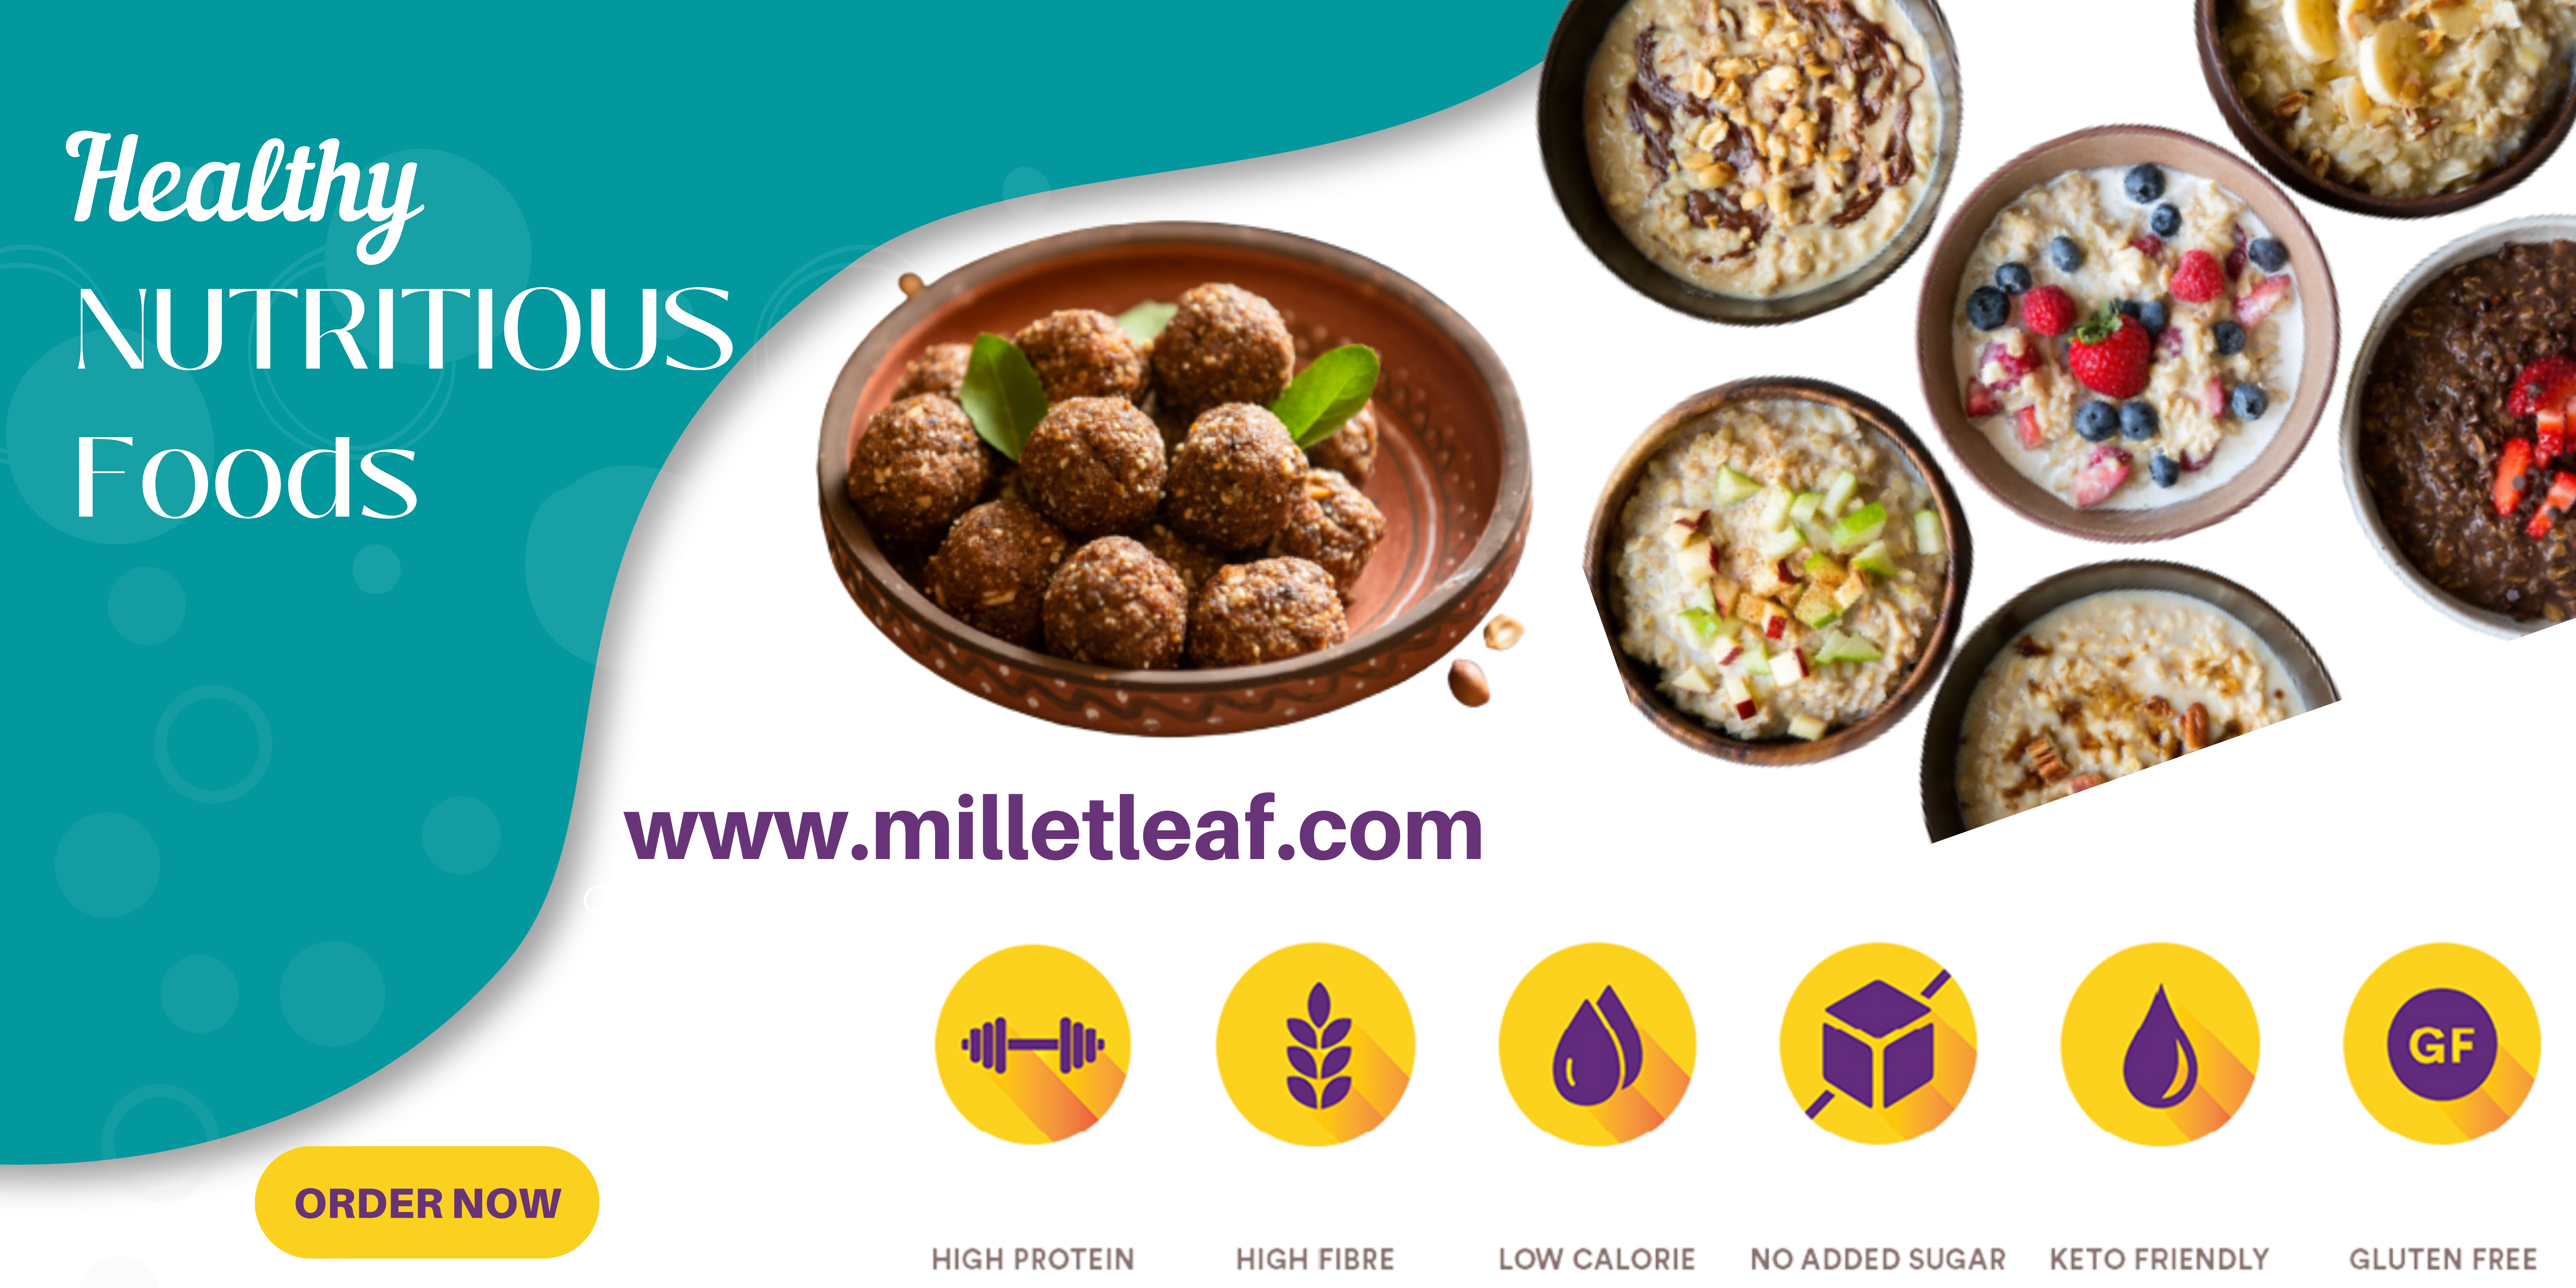 Millet Leaf Healthy Nutritious Foods 